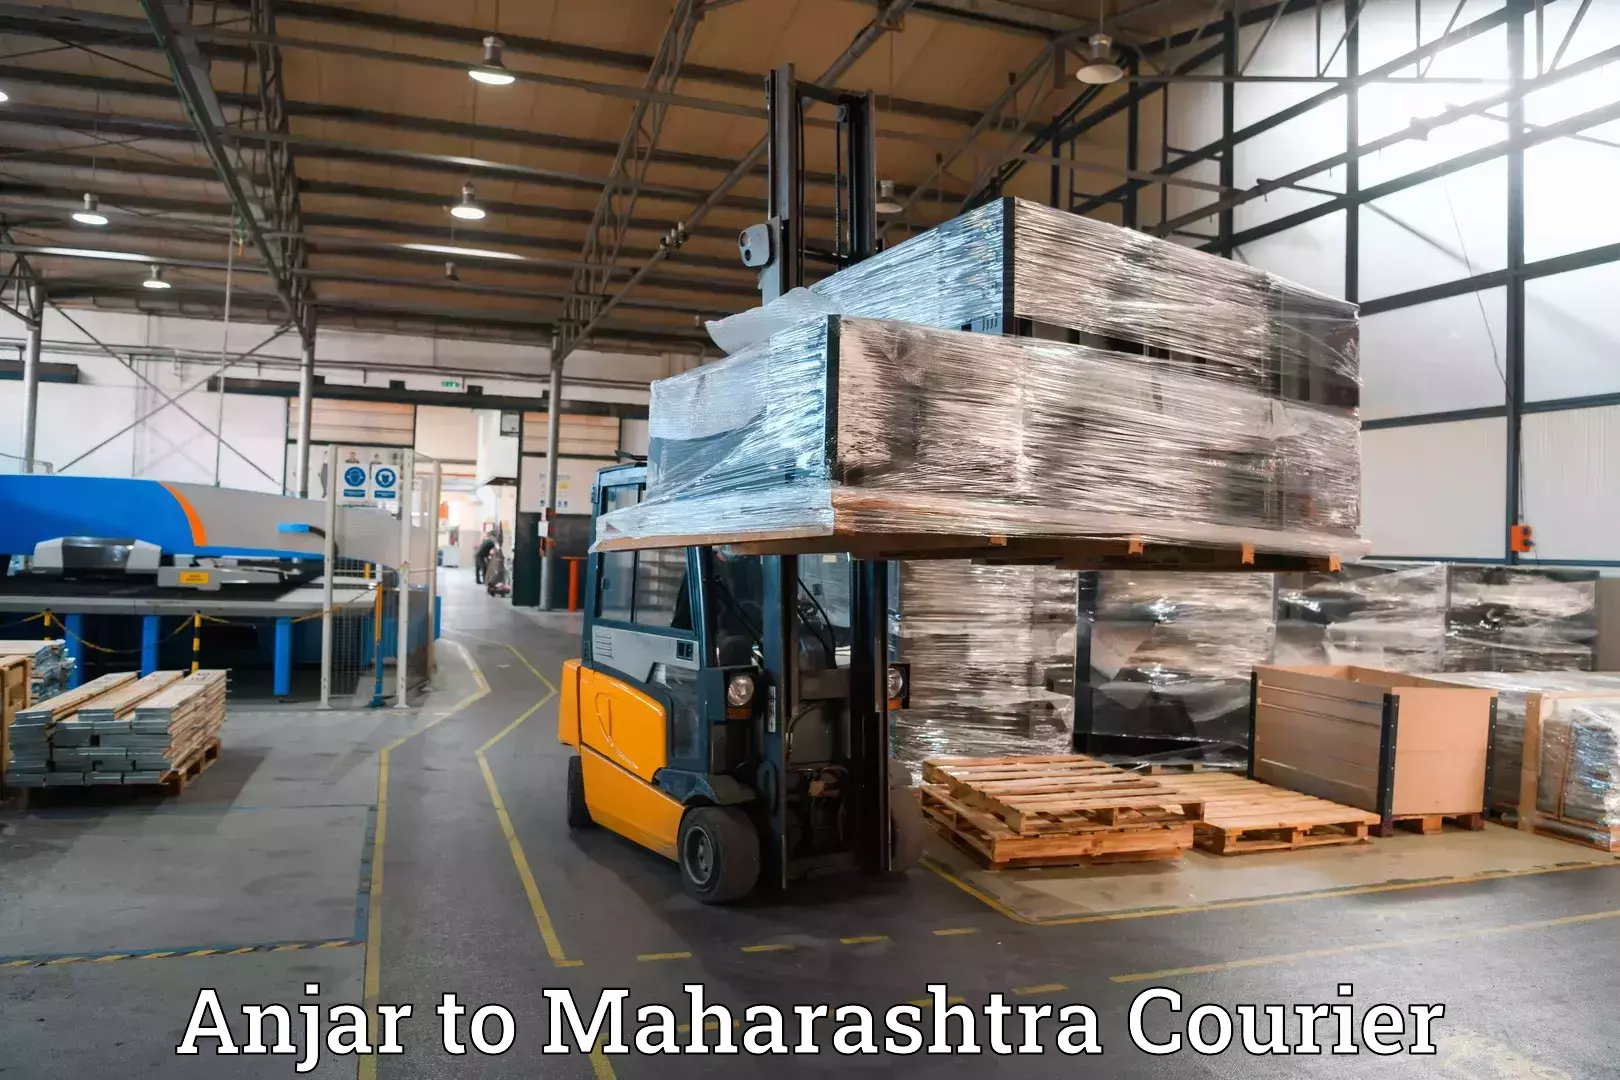 Luggage transport consultancy Anjar to Maharashtra